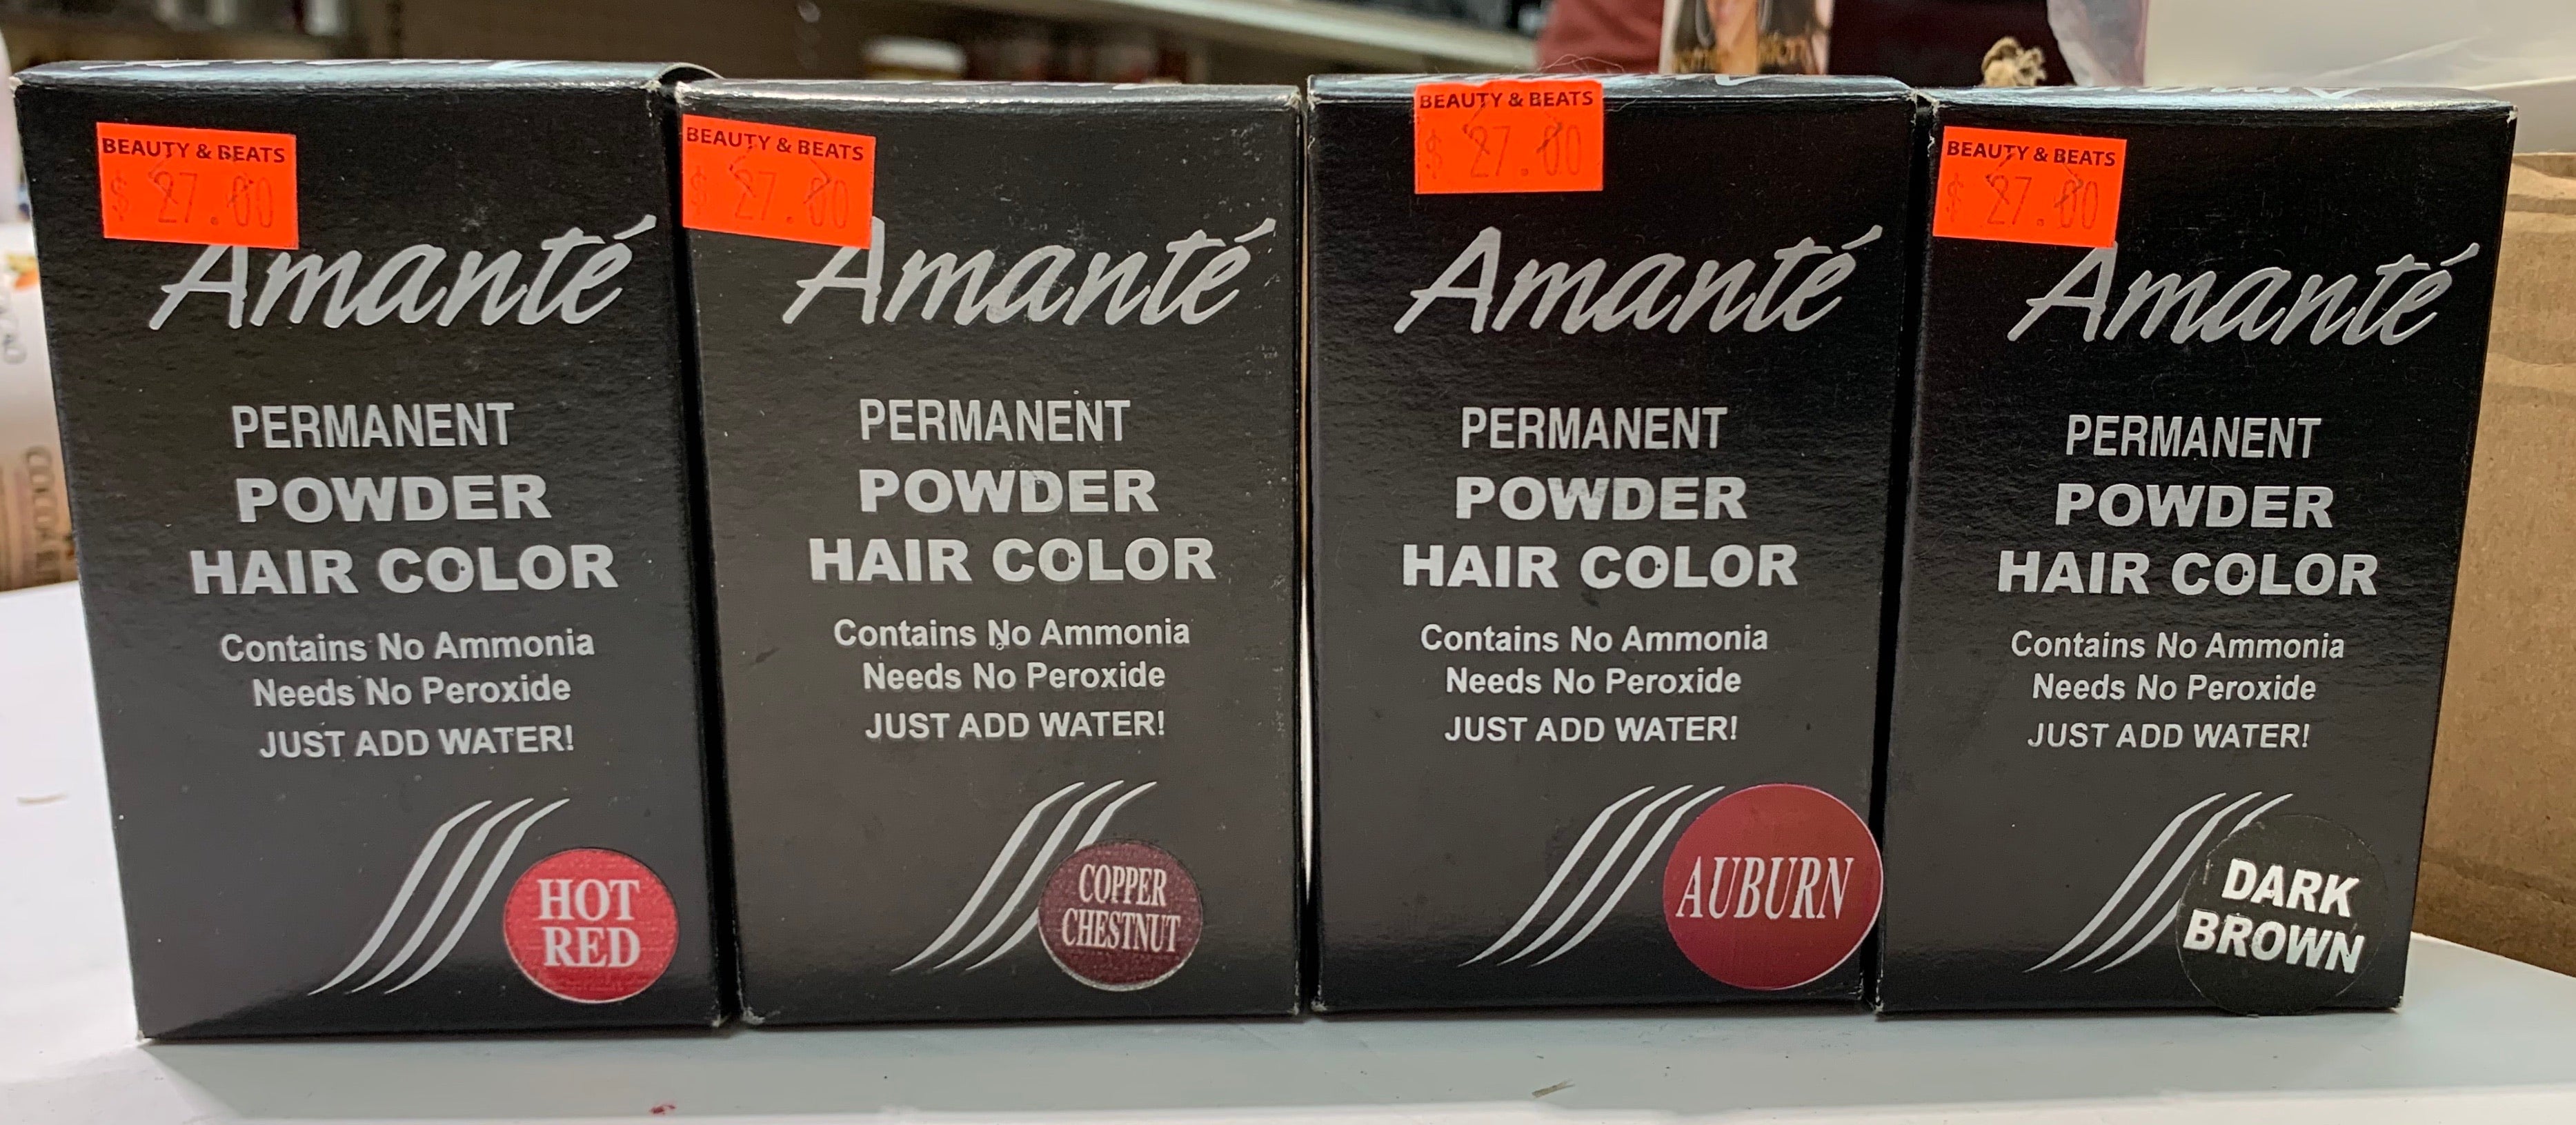 Amante permanent powder hair color